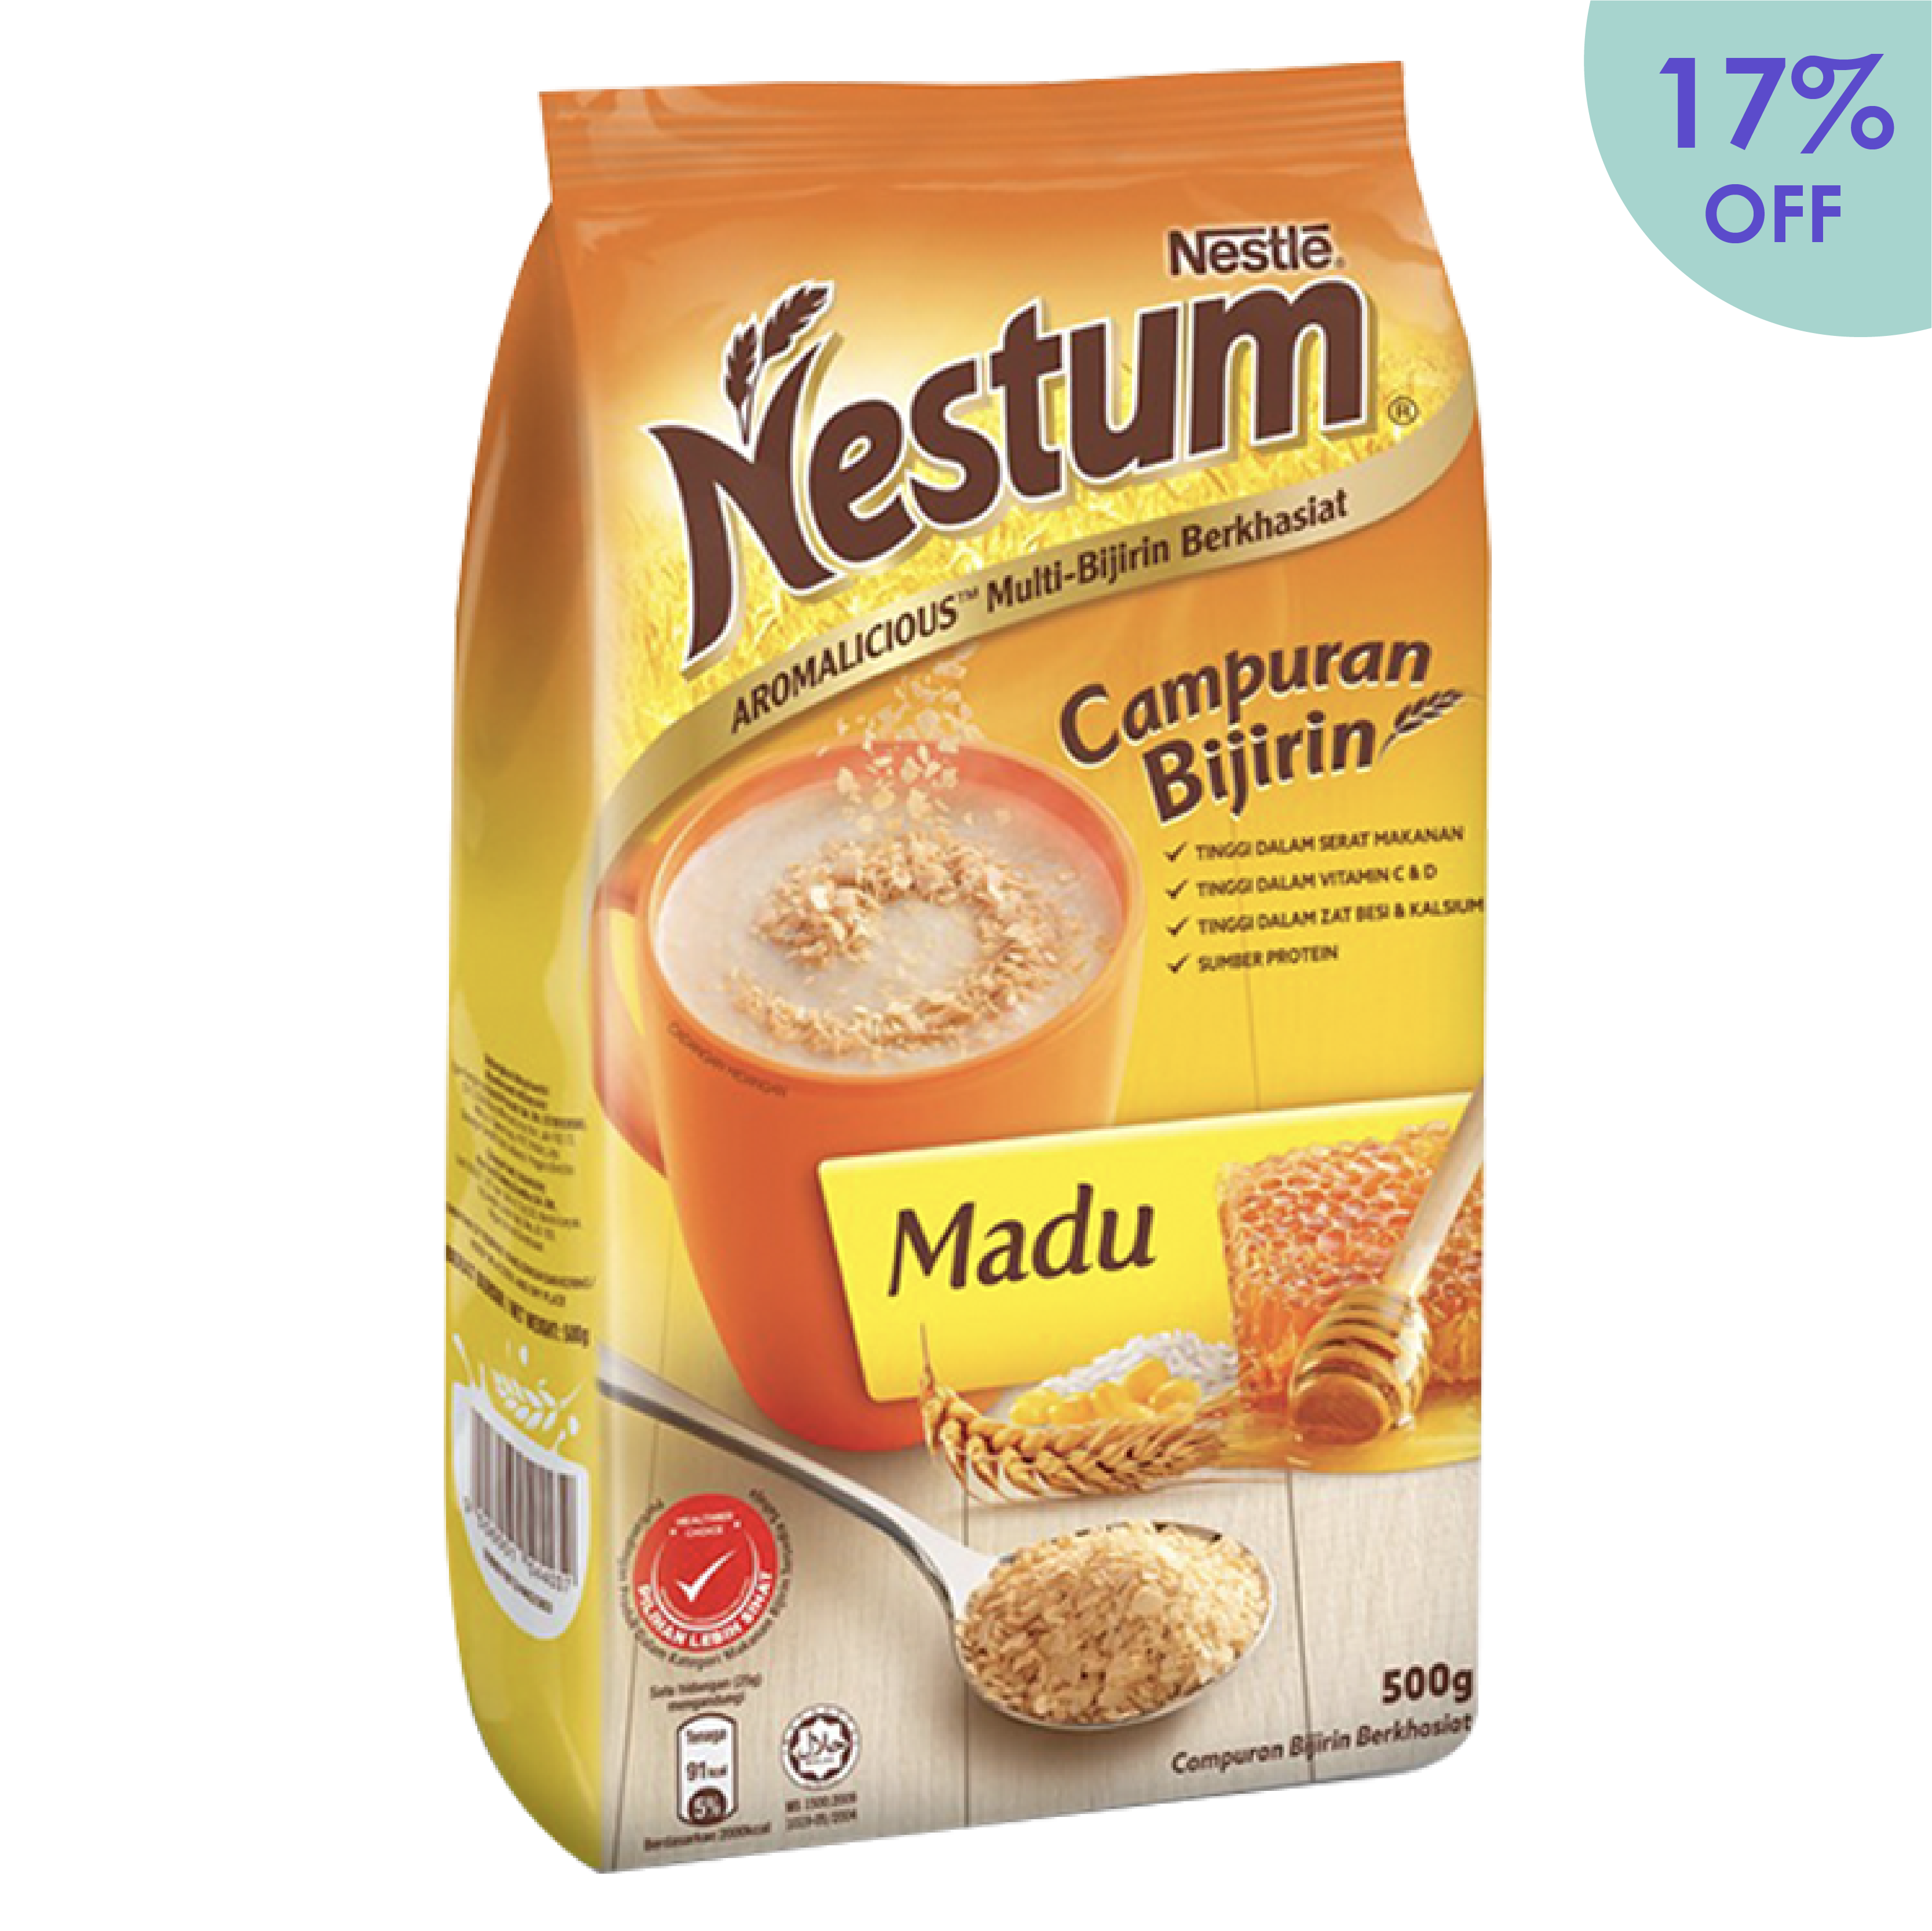 Nestum Whole Honey 250g